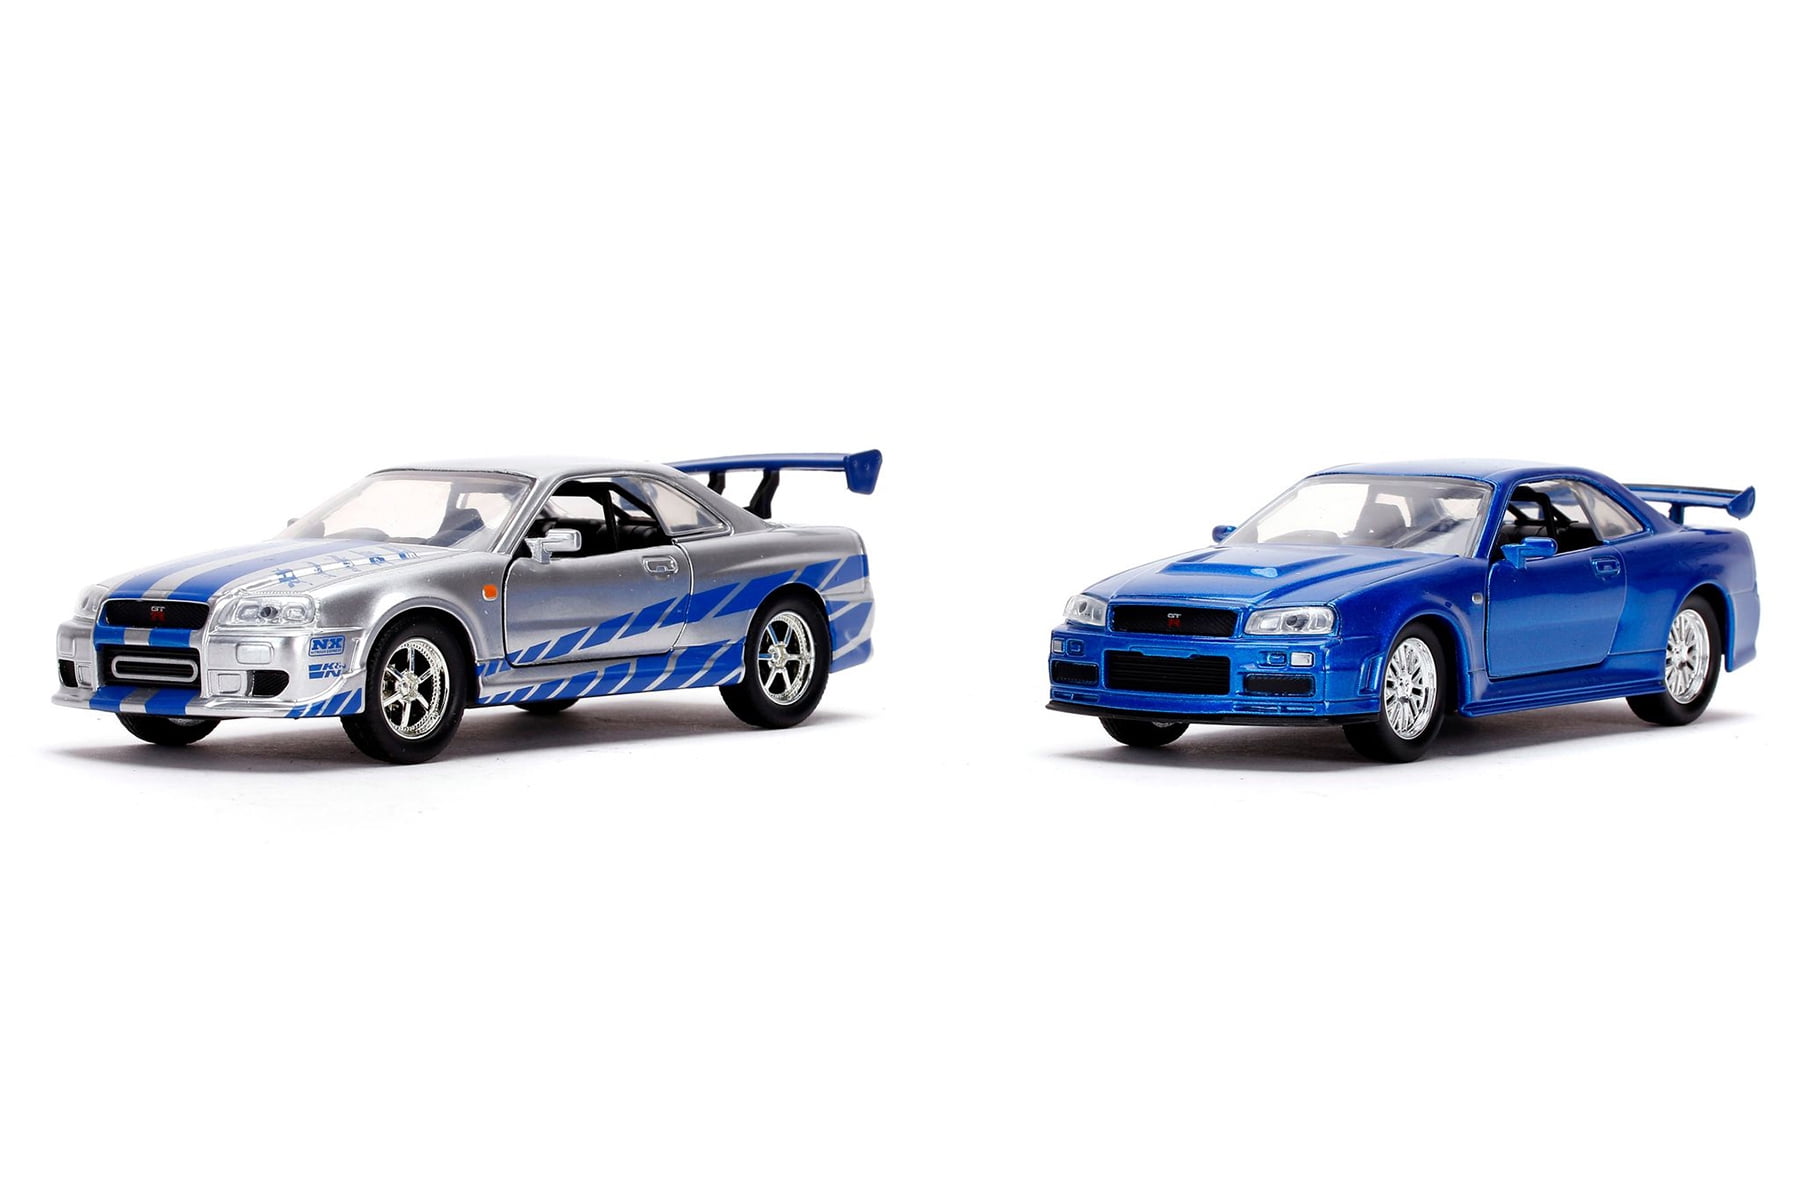 Brian S Nissan Skyline Gt R Hardtop Fast Furious Jada Toys 1 32 Scale Diecast Model Toy Car Walmart Com Walmart Com